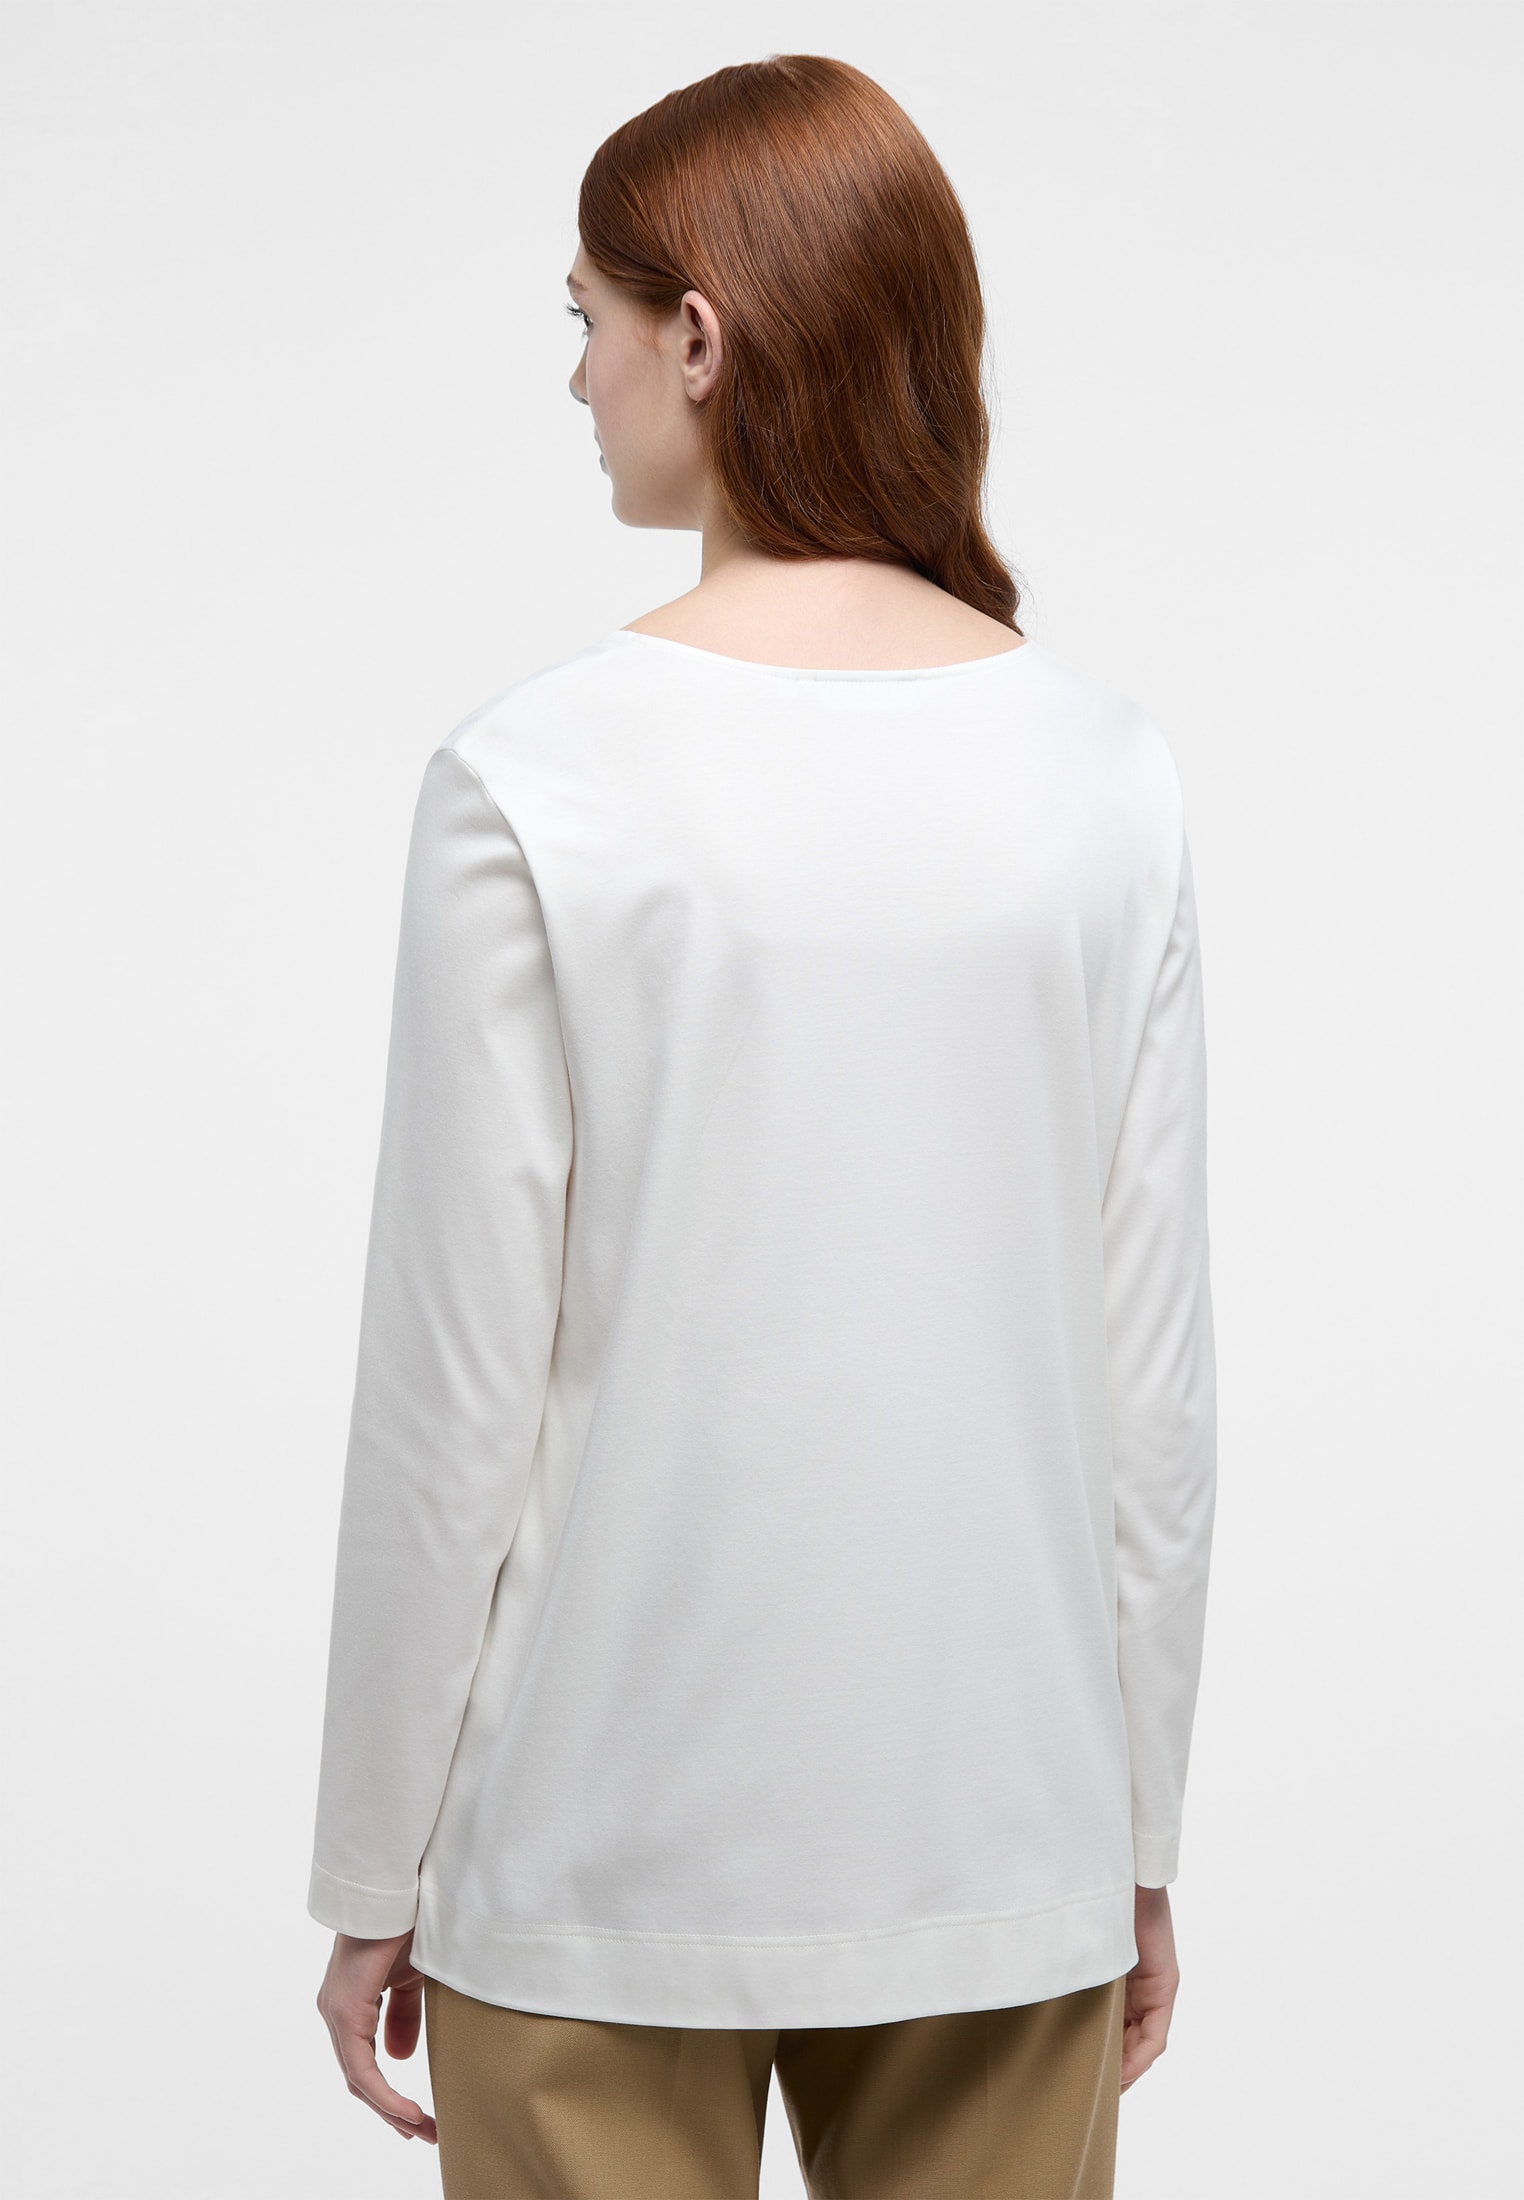 Shirt | | in Viscose Bluse 46 off-white 2BL04252-00-02-46-1/1 off-white unifarben | Langarm |